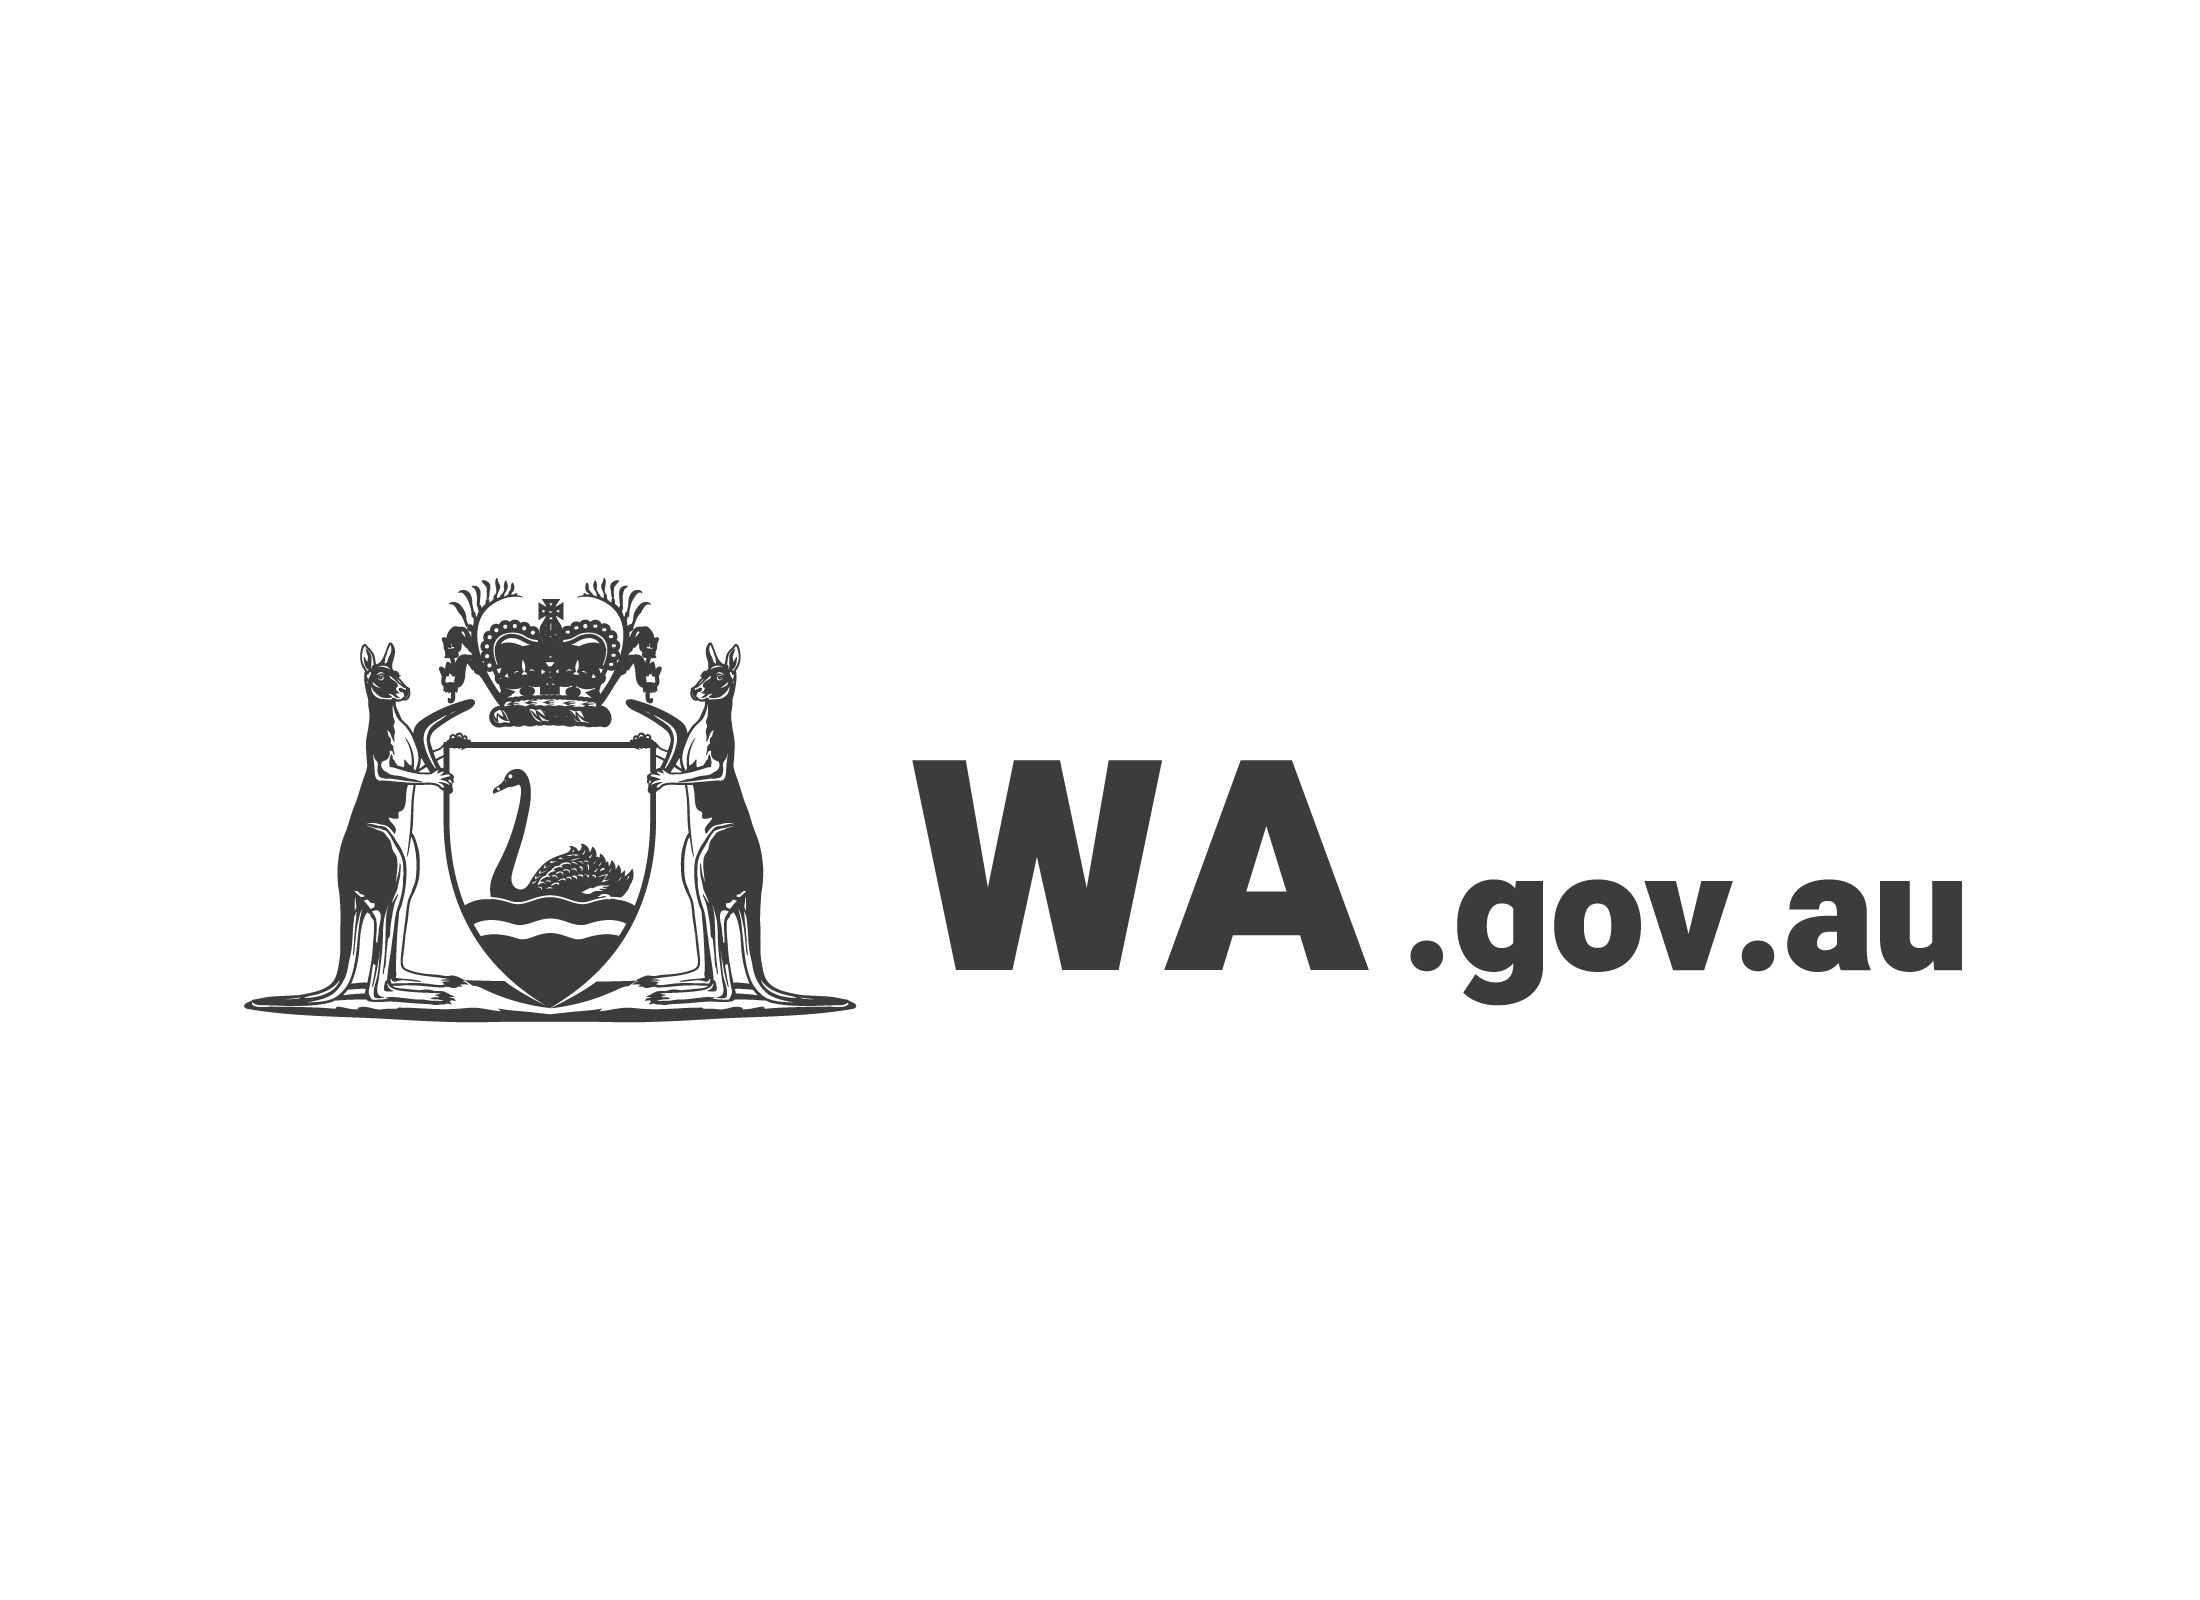 Western Australia government websites